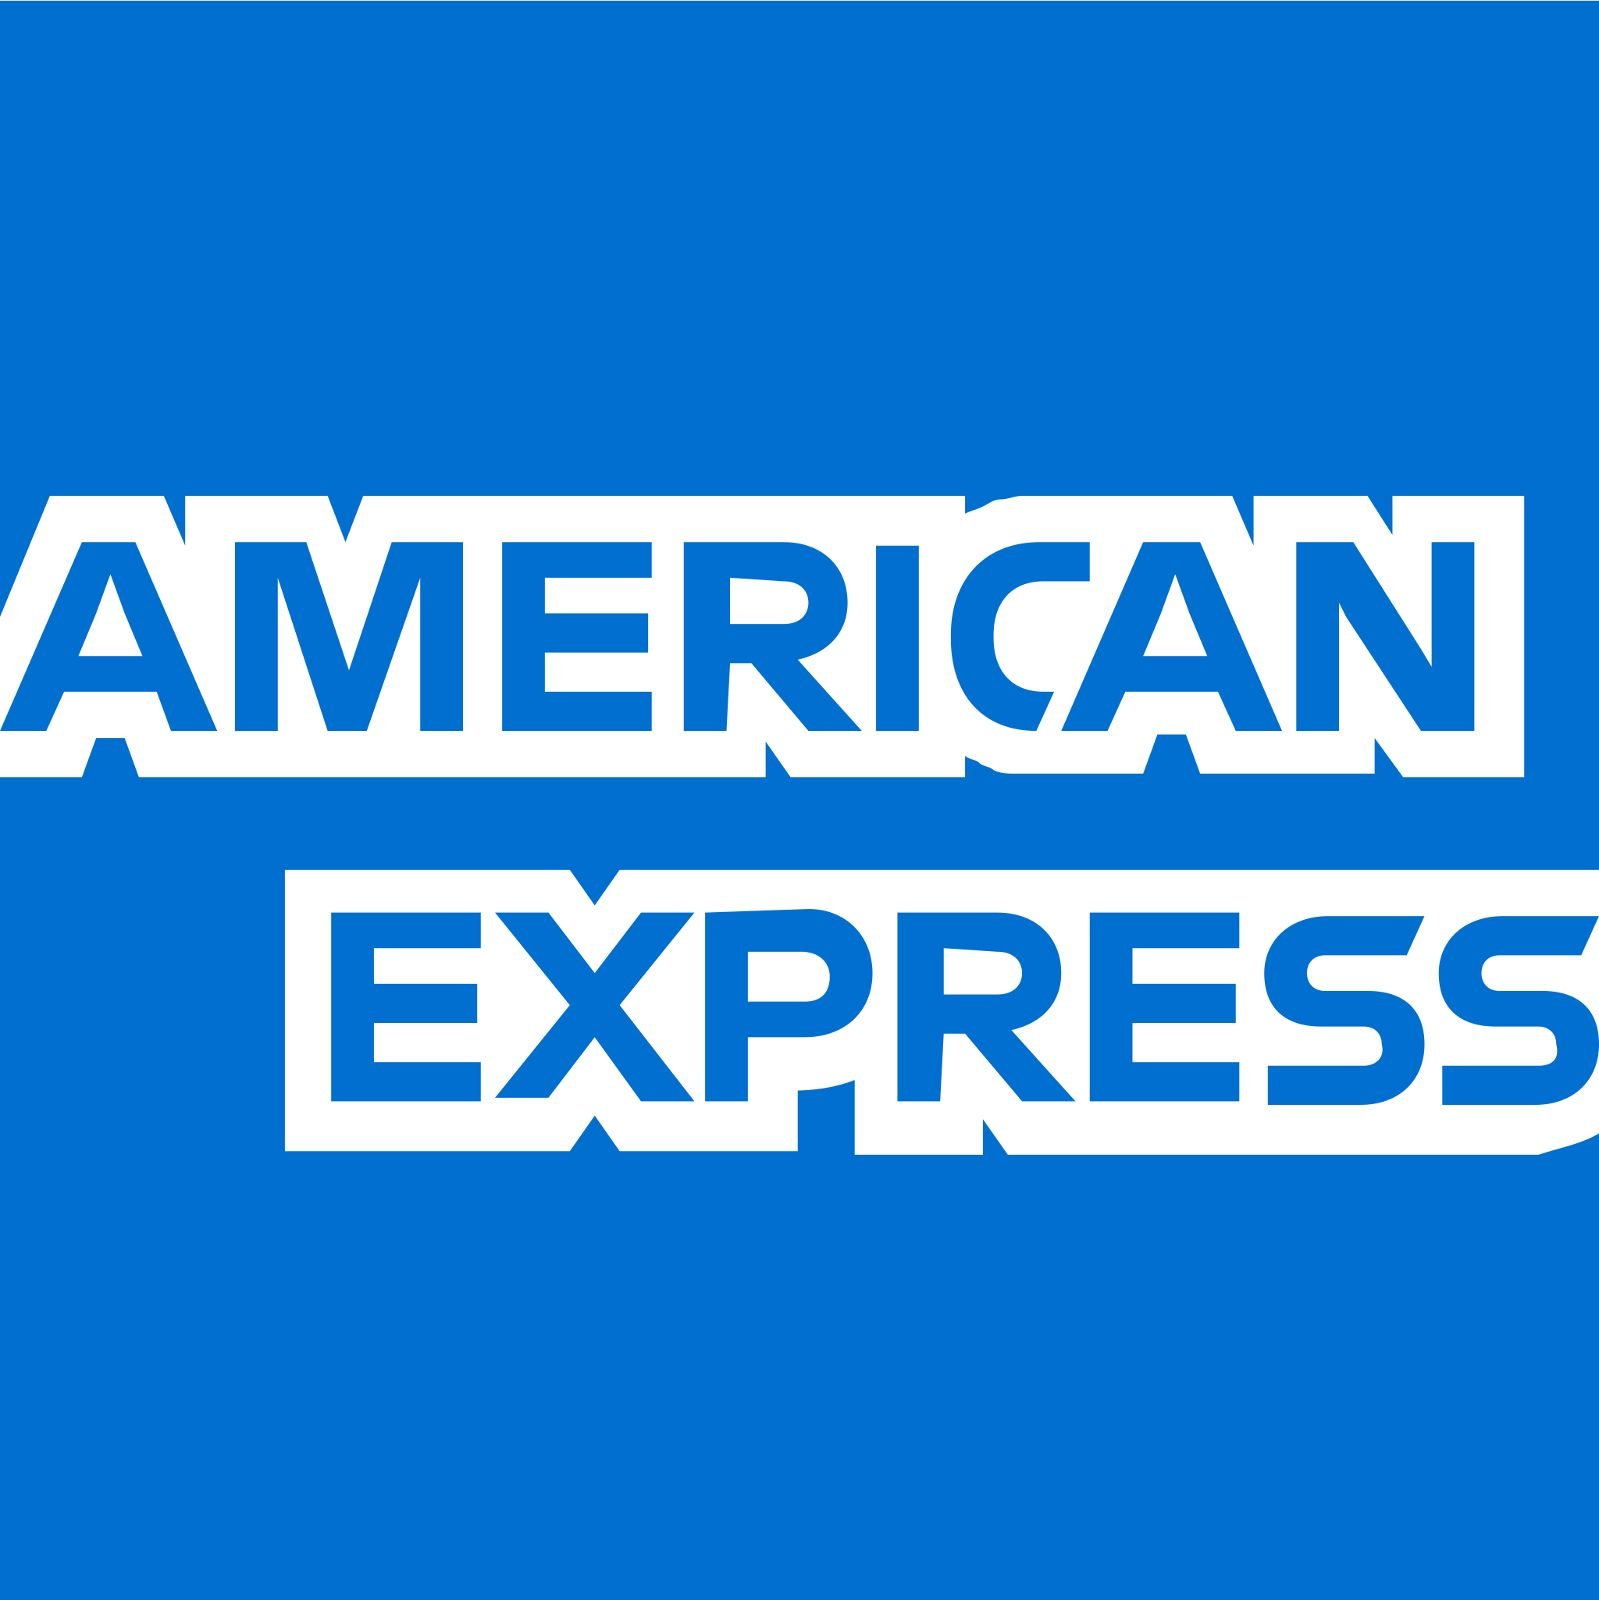 Amex american express logo